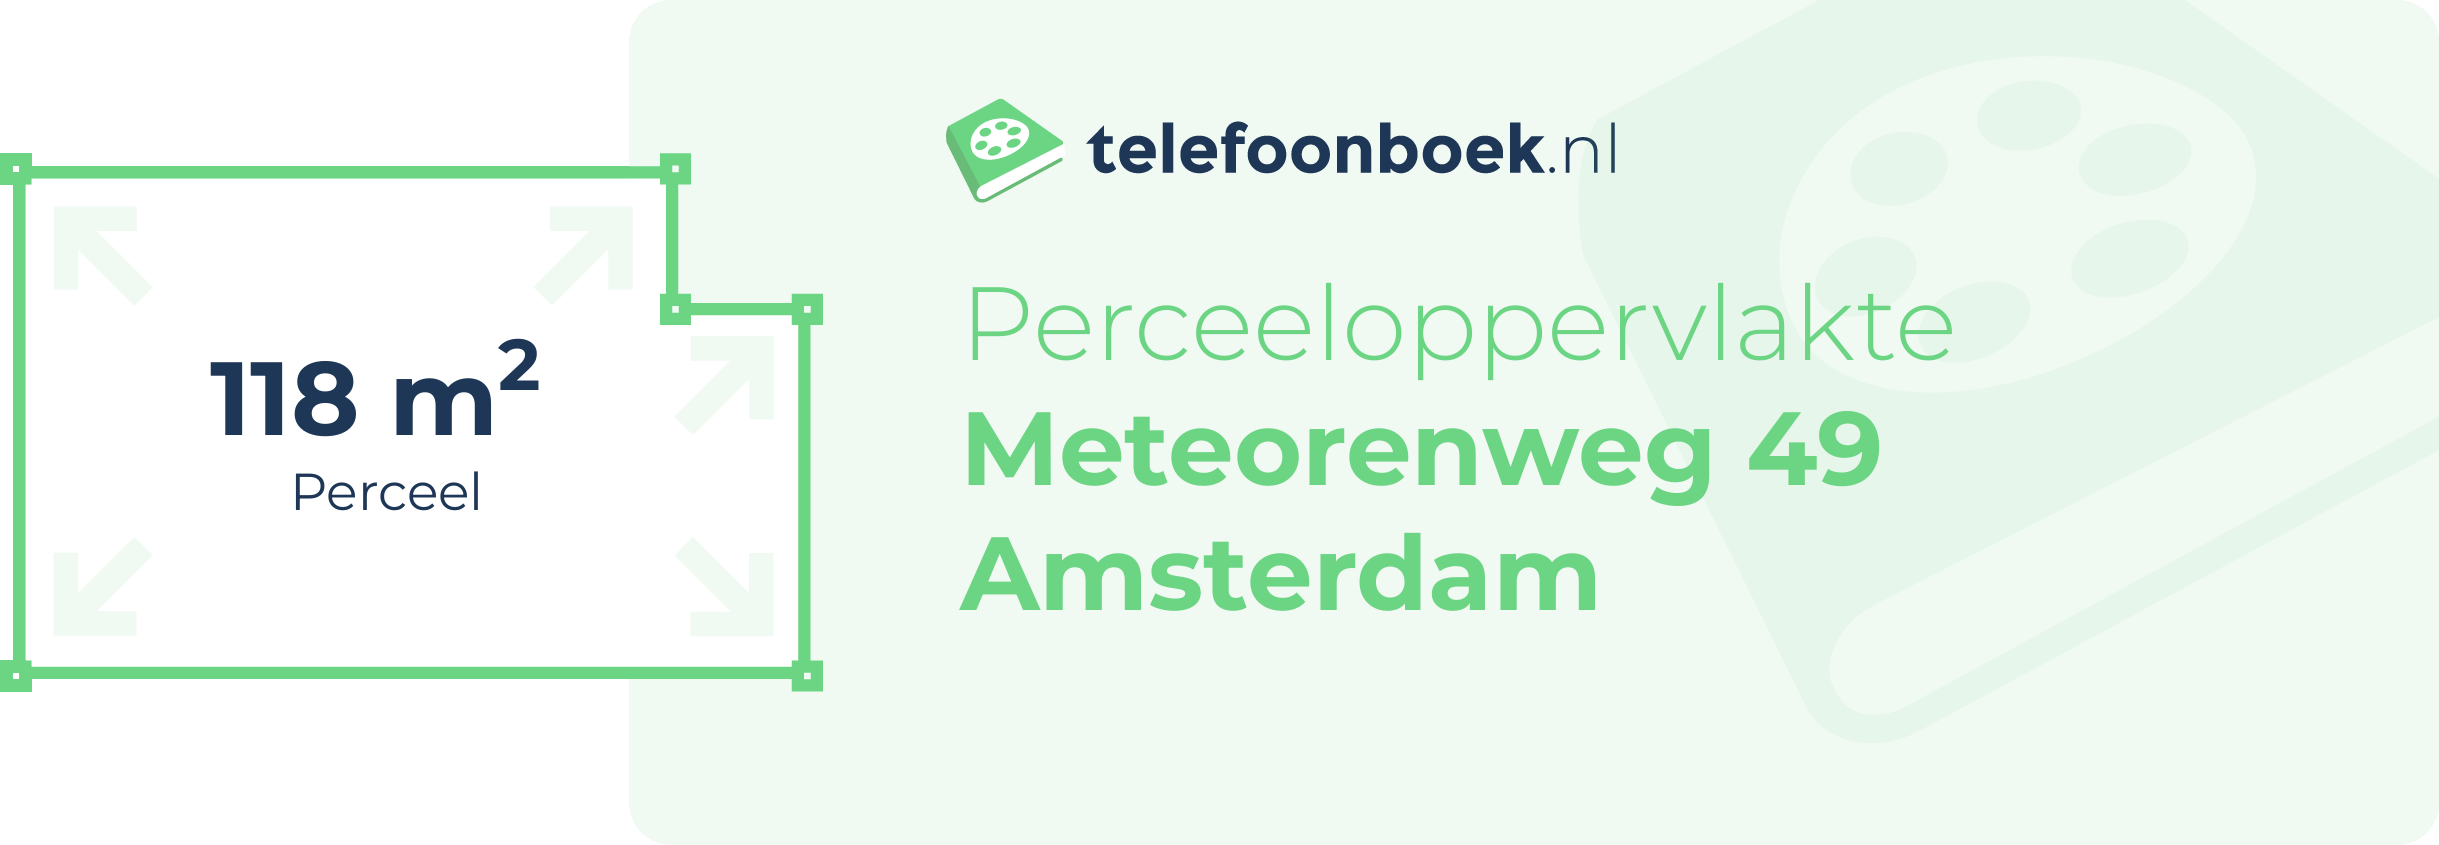 Perceeloppervlakte Meteorenweg 49 Amsterdam